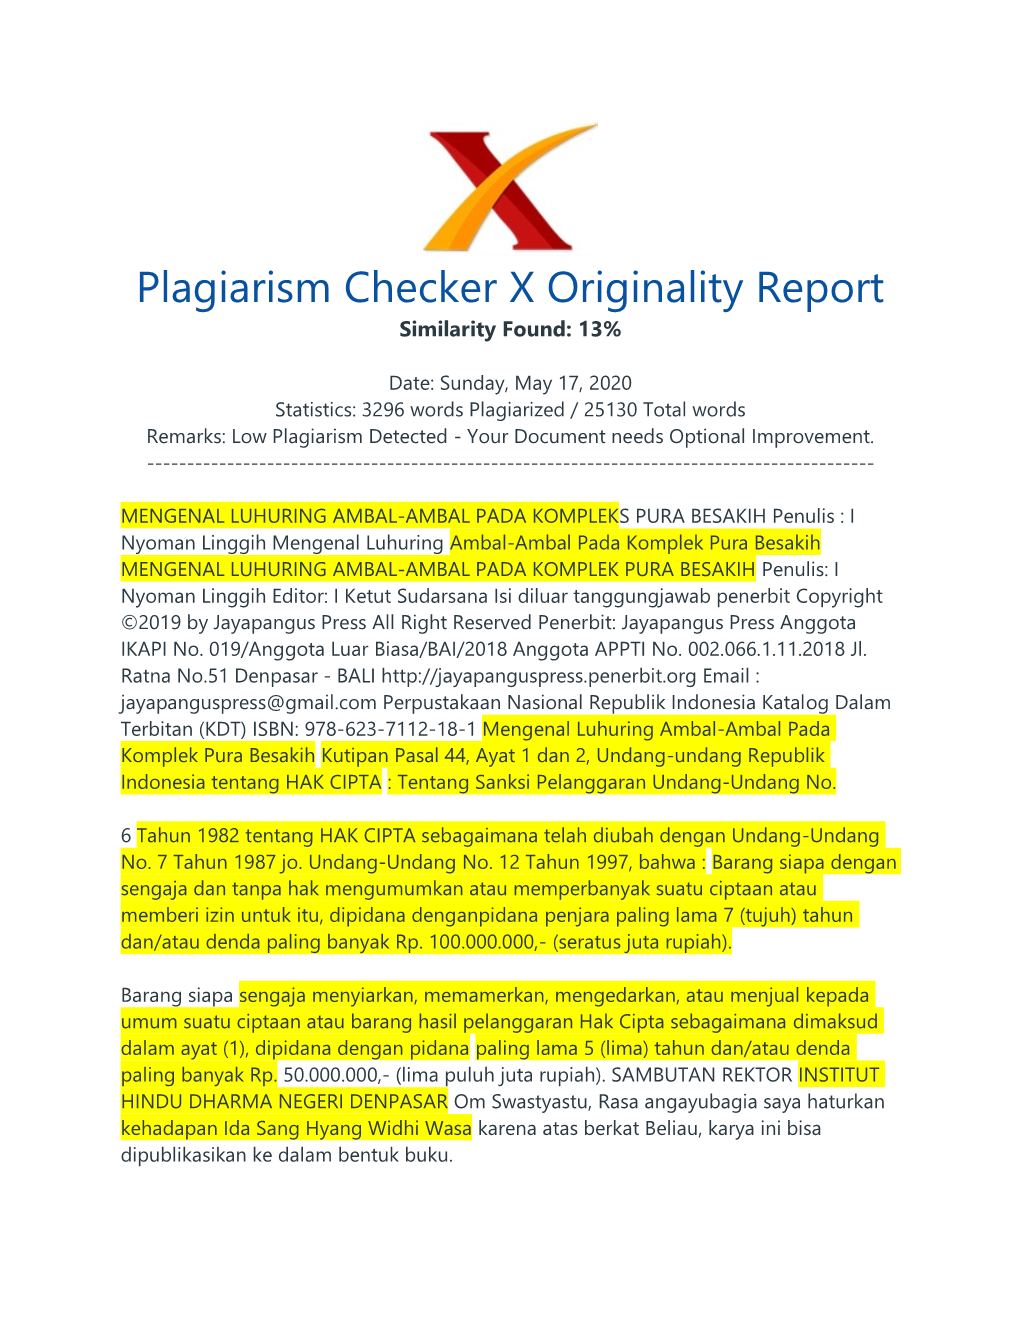 Plagiarism Checker X Originality Report Similarity Found: 13%